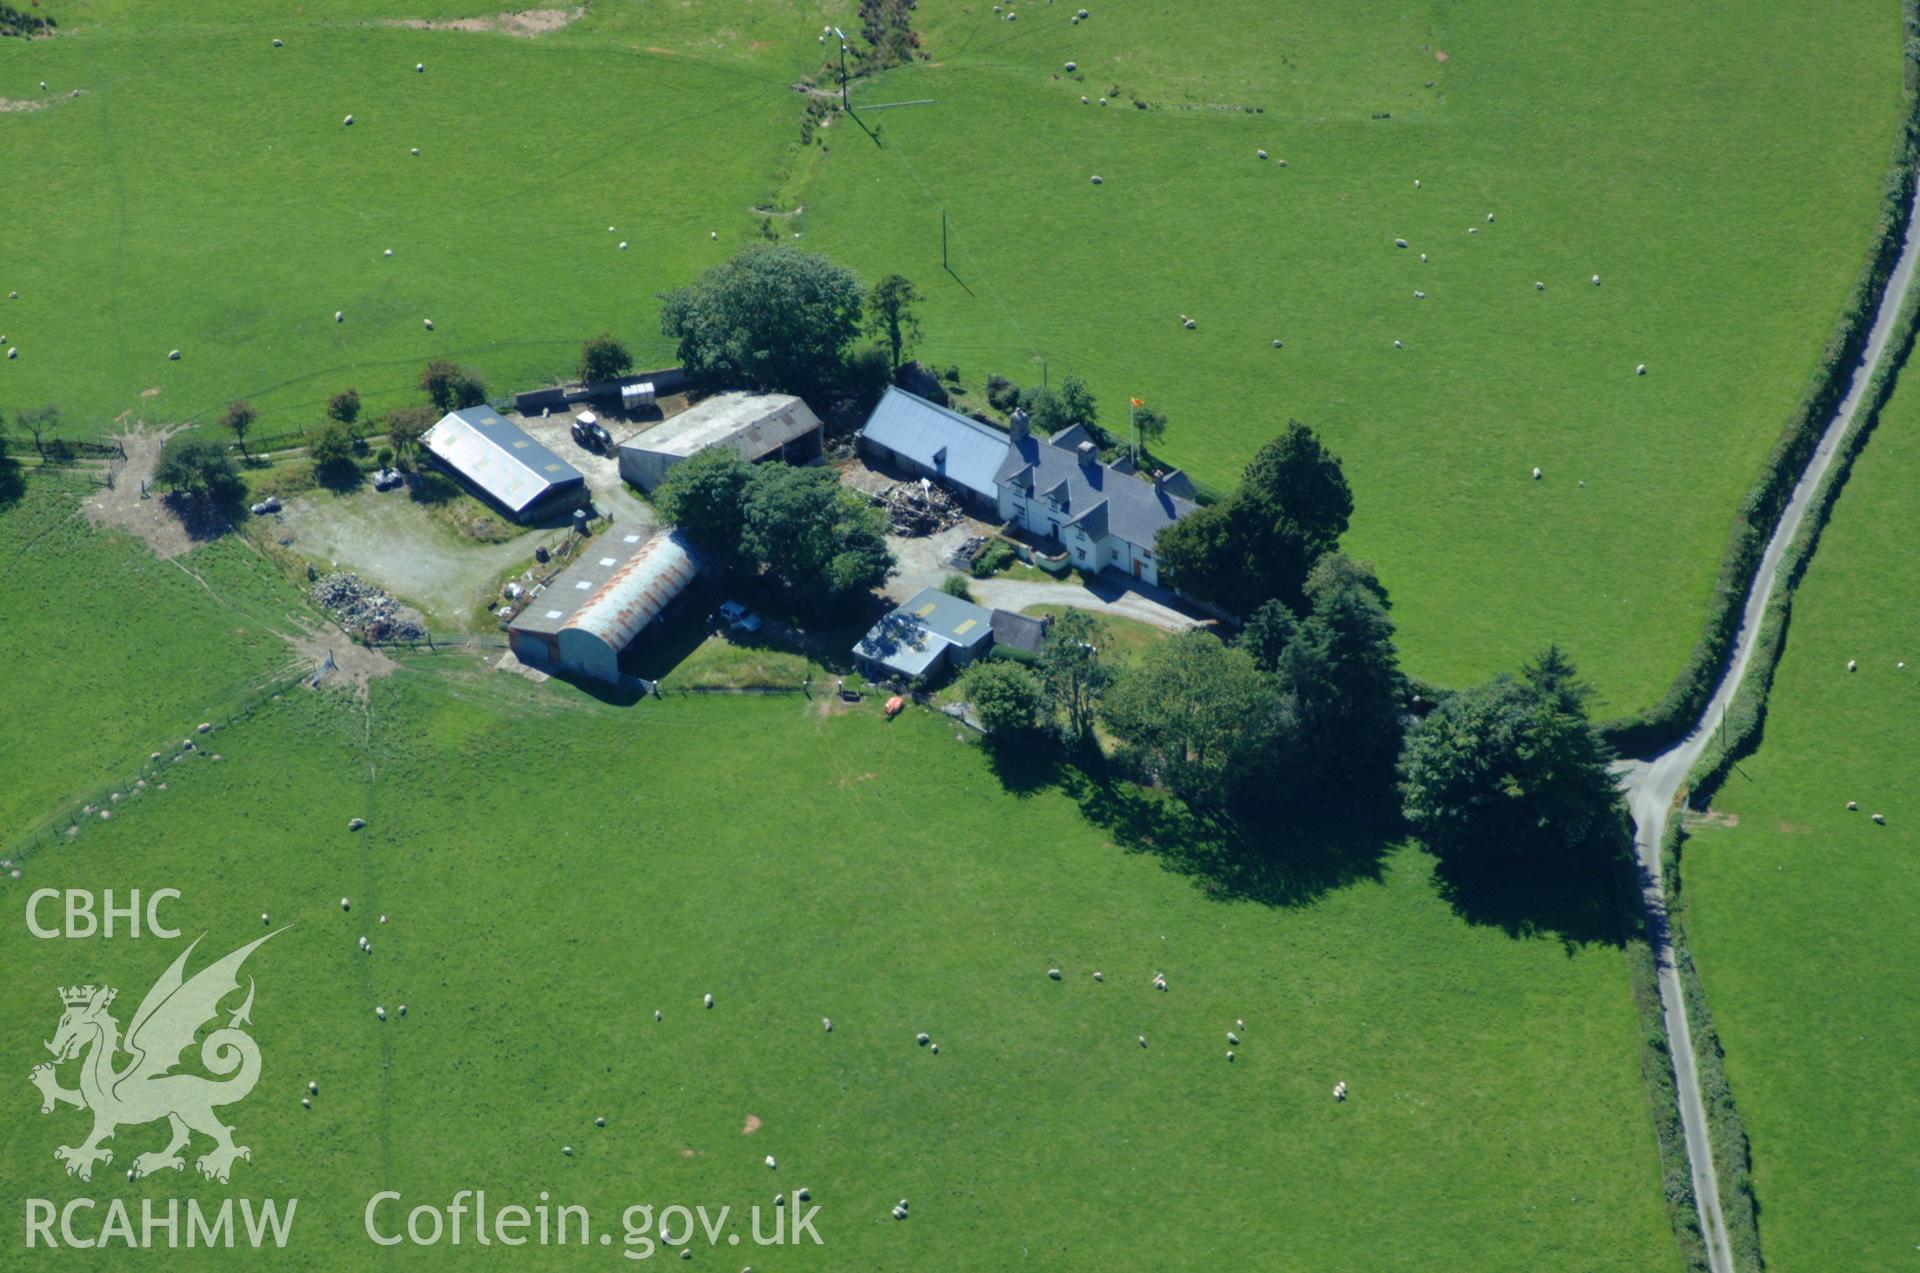 RCAHMW colour oblique aerial photograph of Cefn Caer Farmhouse, Pennal taken on 14/06/2004 by Toby Driver